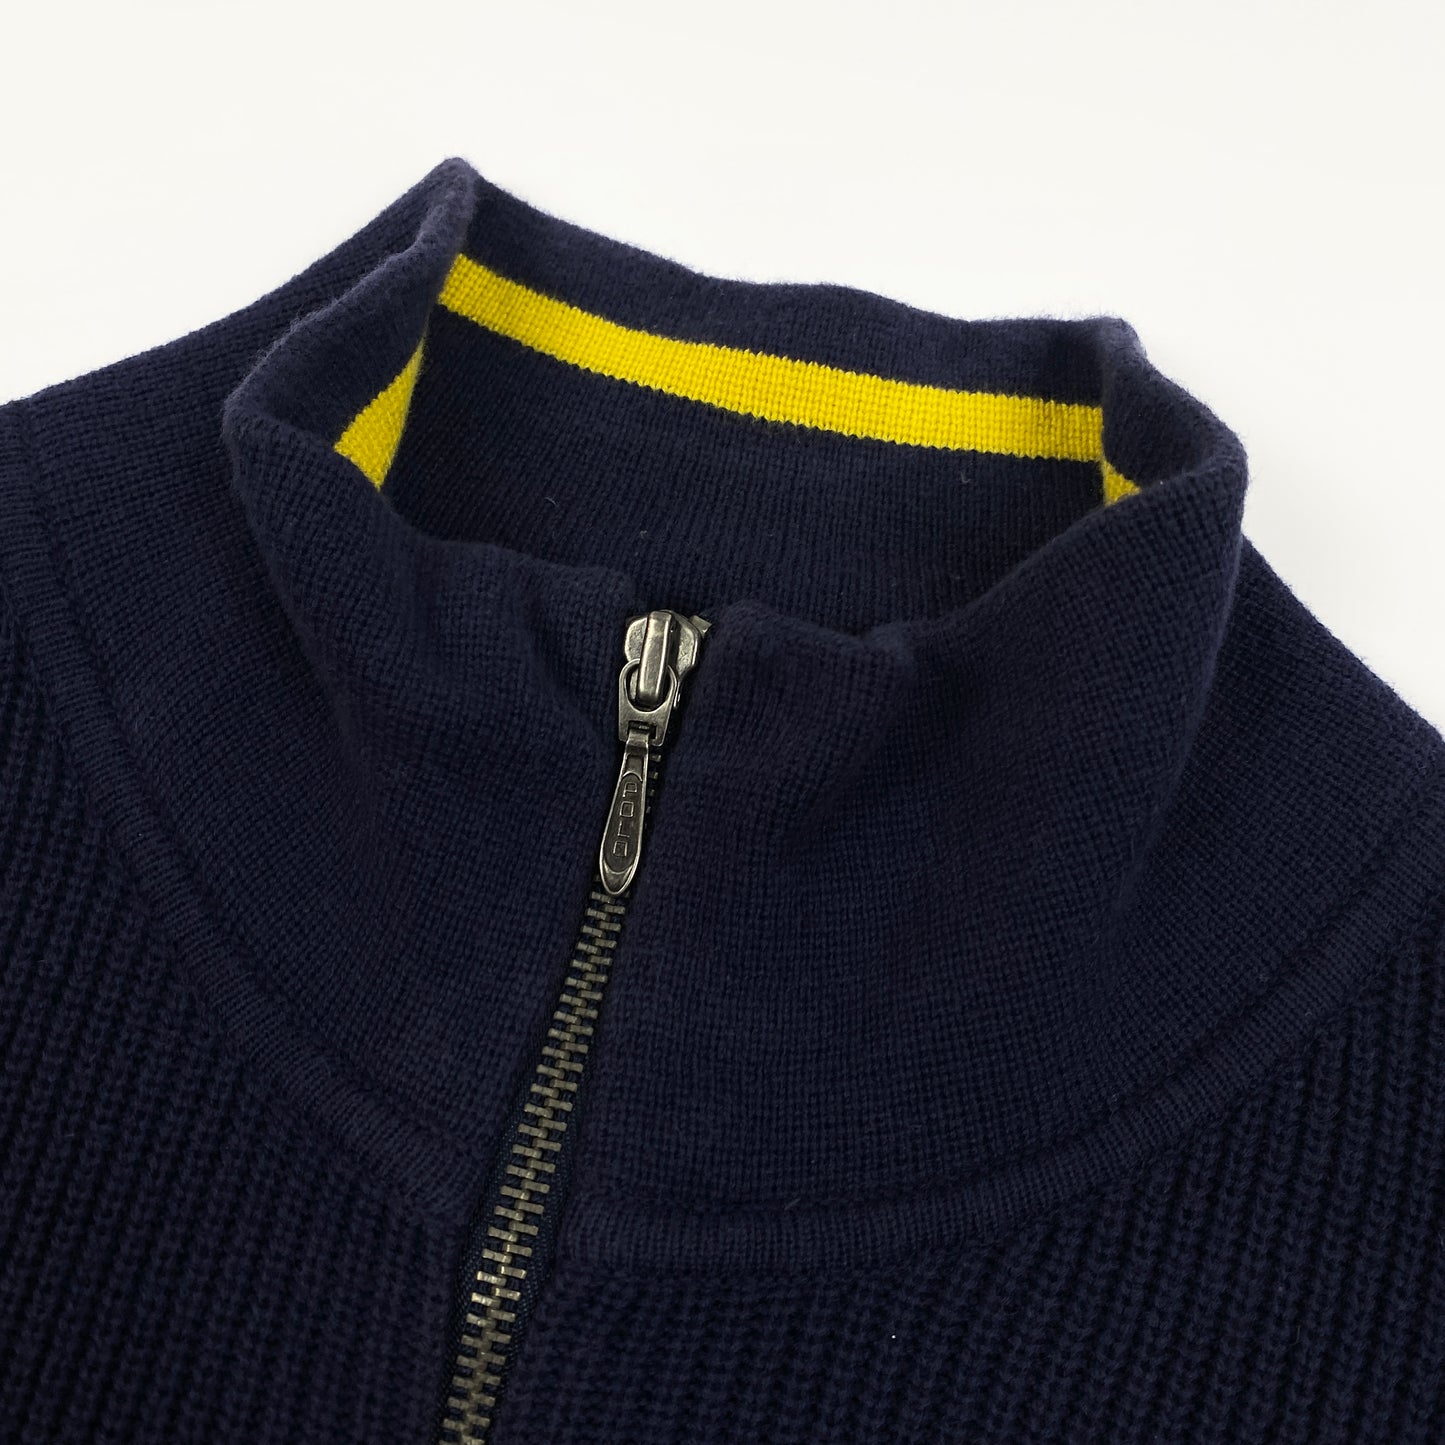 Vintage POLO SPORT Ralph Lauren Wool Knit Half Zip Sweater